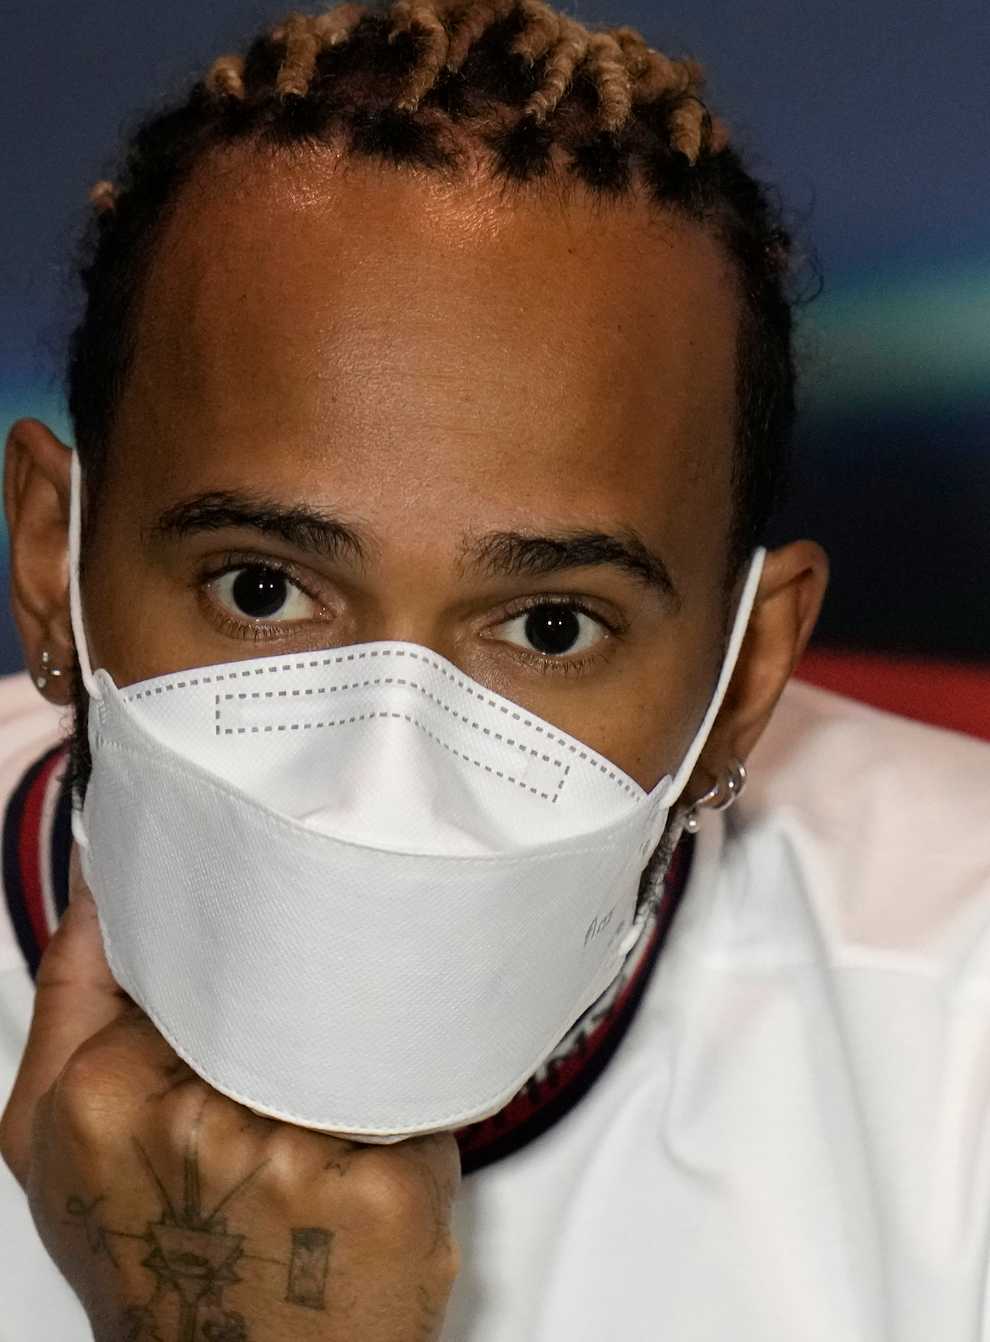 Lewis Hamilton finished only 10th a last weekend’s Saudi Arabian GP (Hassan Ammar/AP)